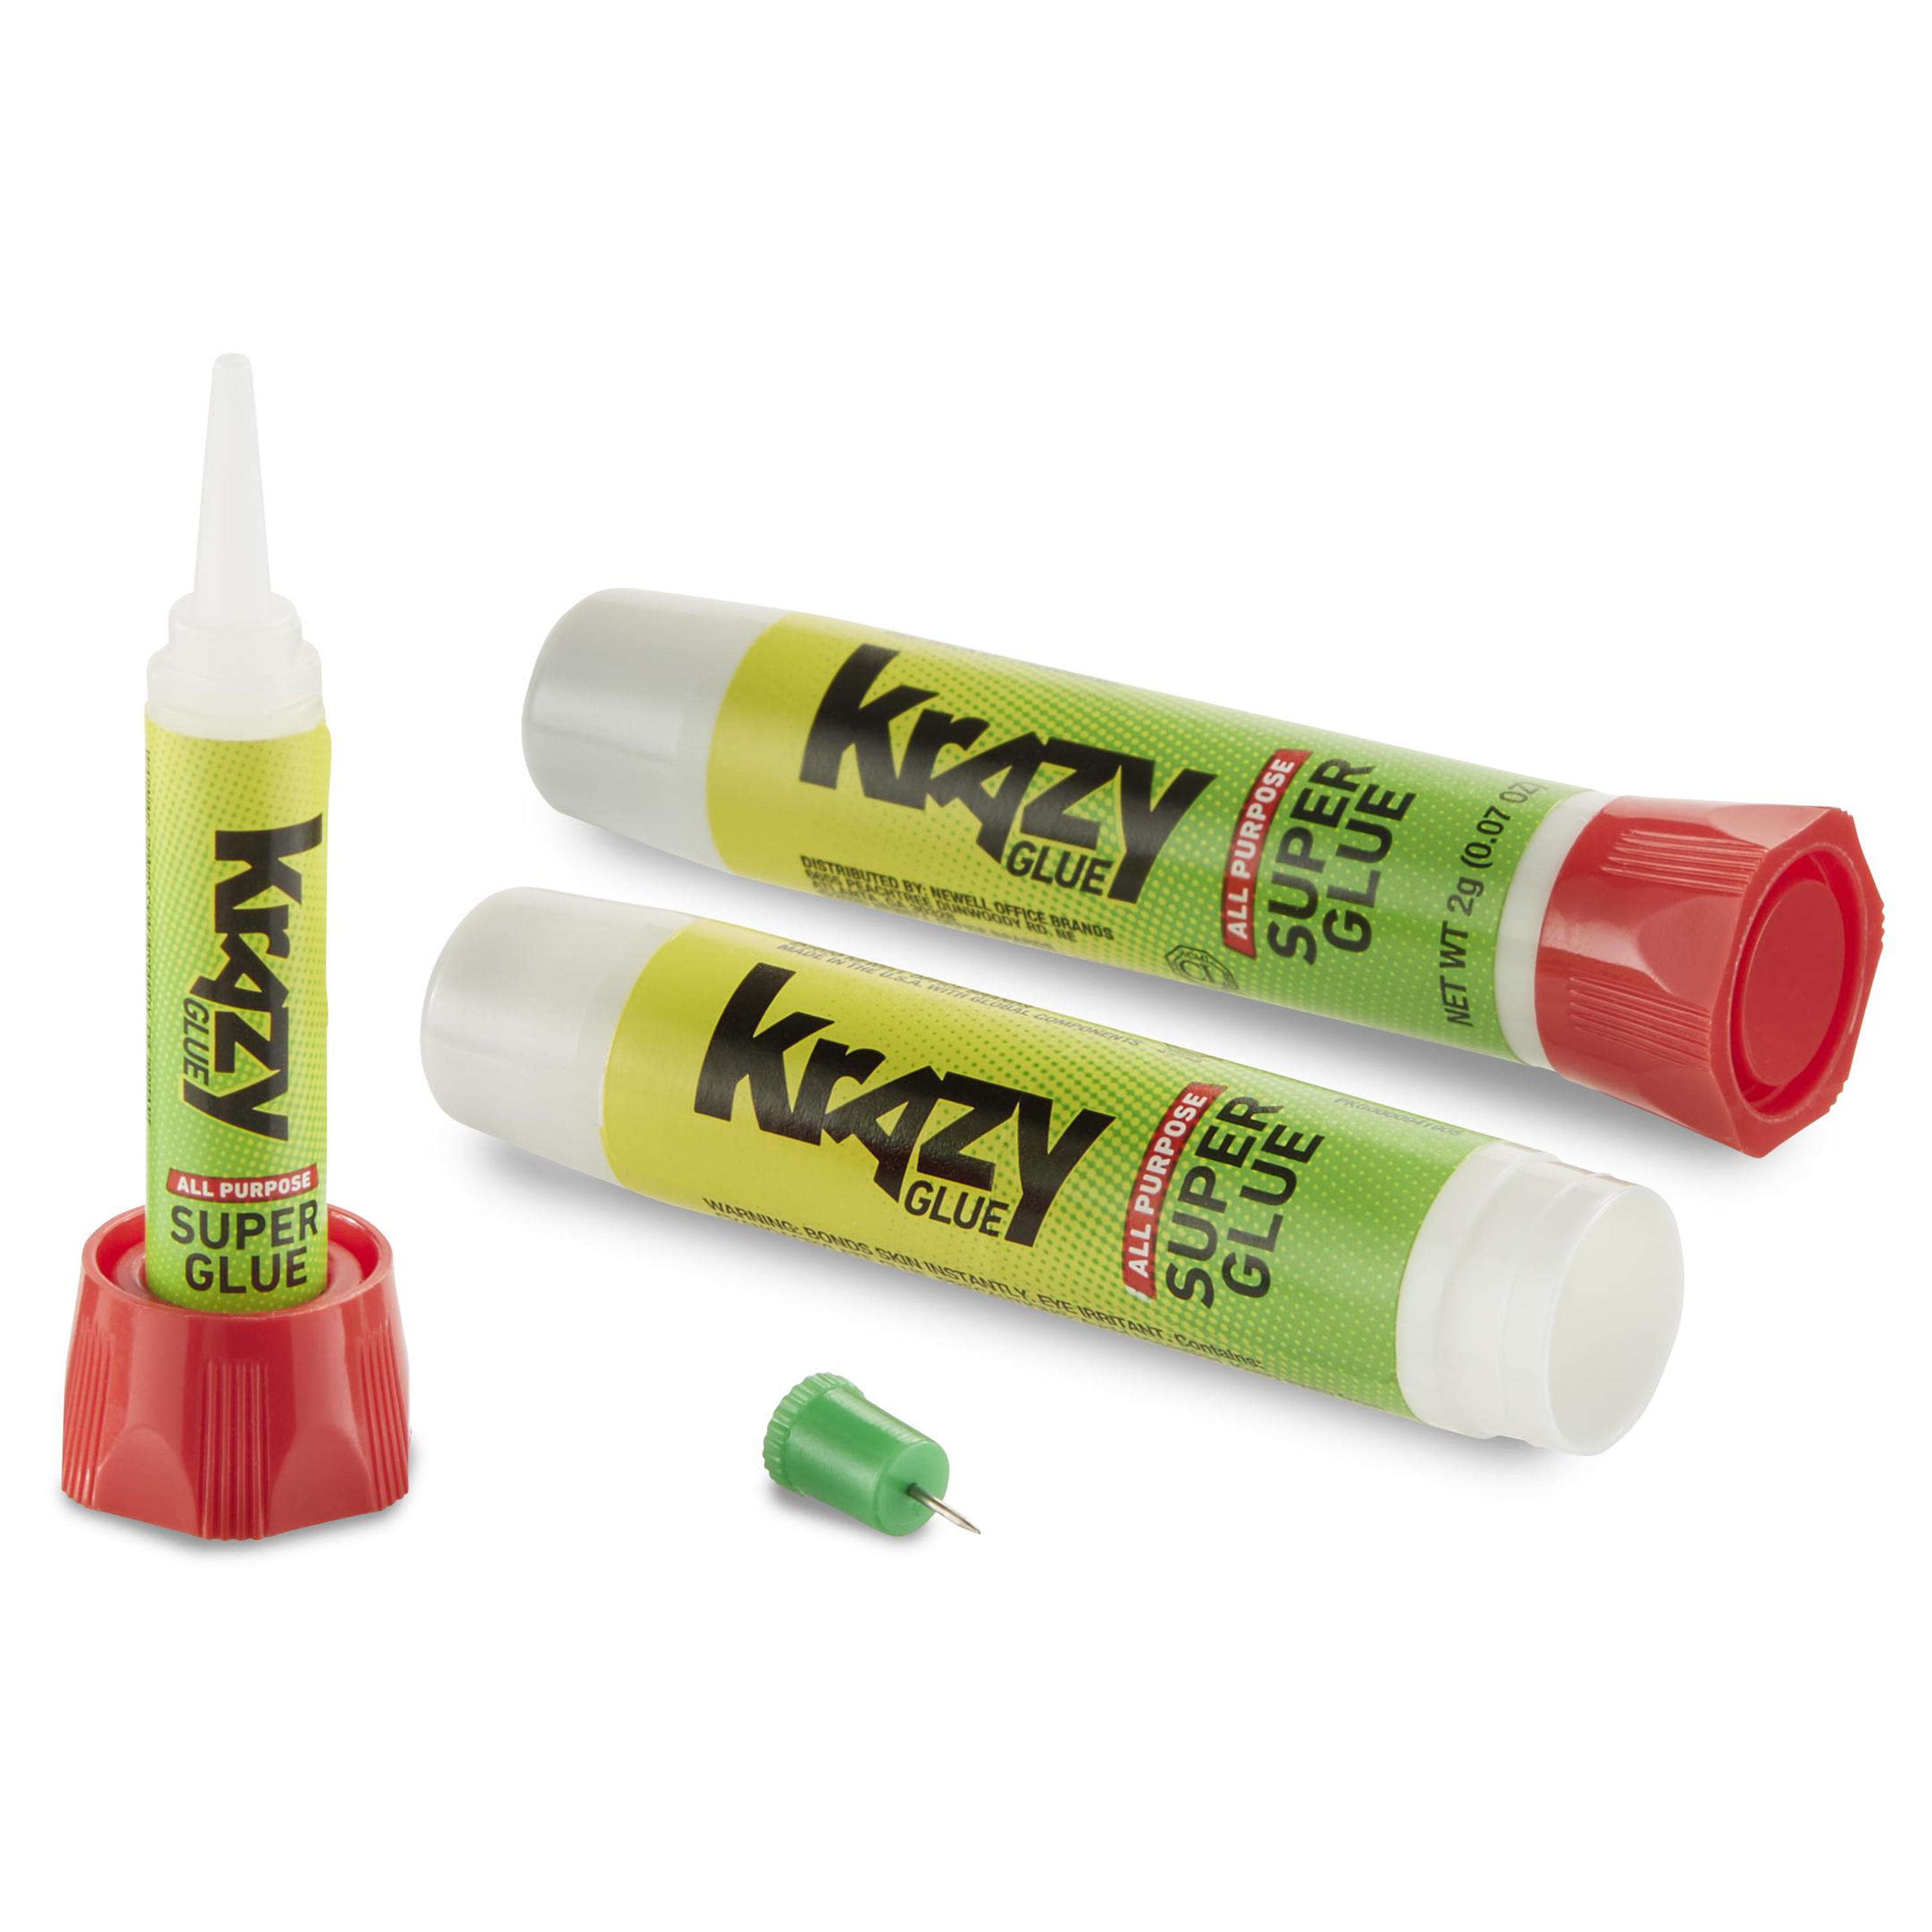 Krazy Glue, All Purpose Super Glue, Precision Tip, 2 g, 2 Count - image 4 of 7